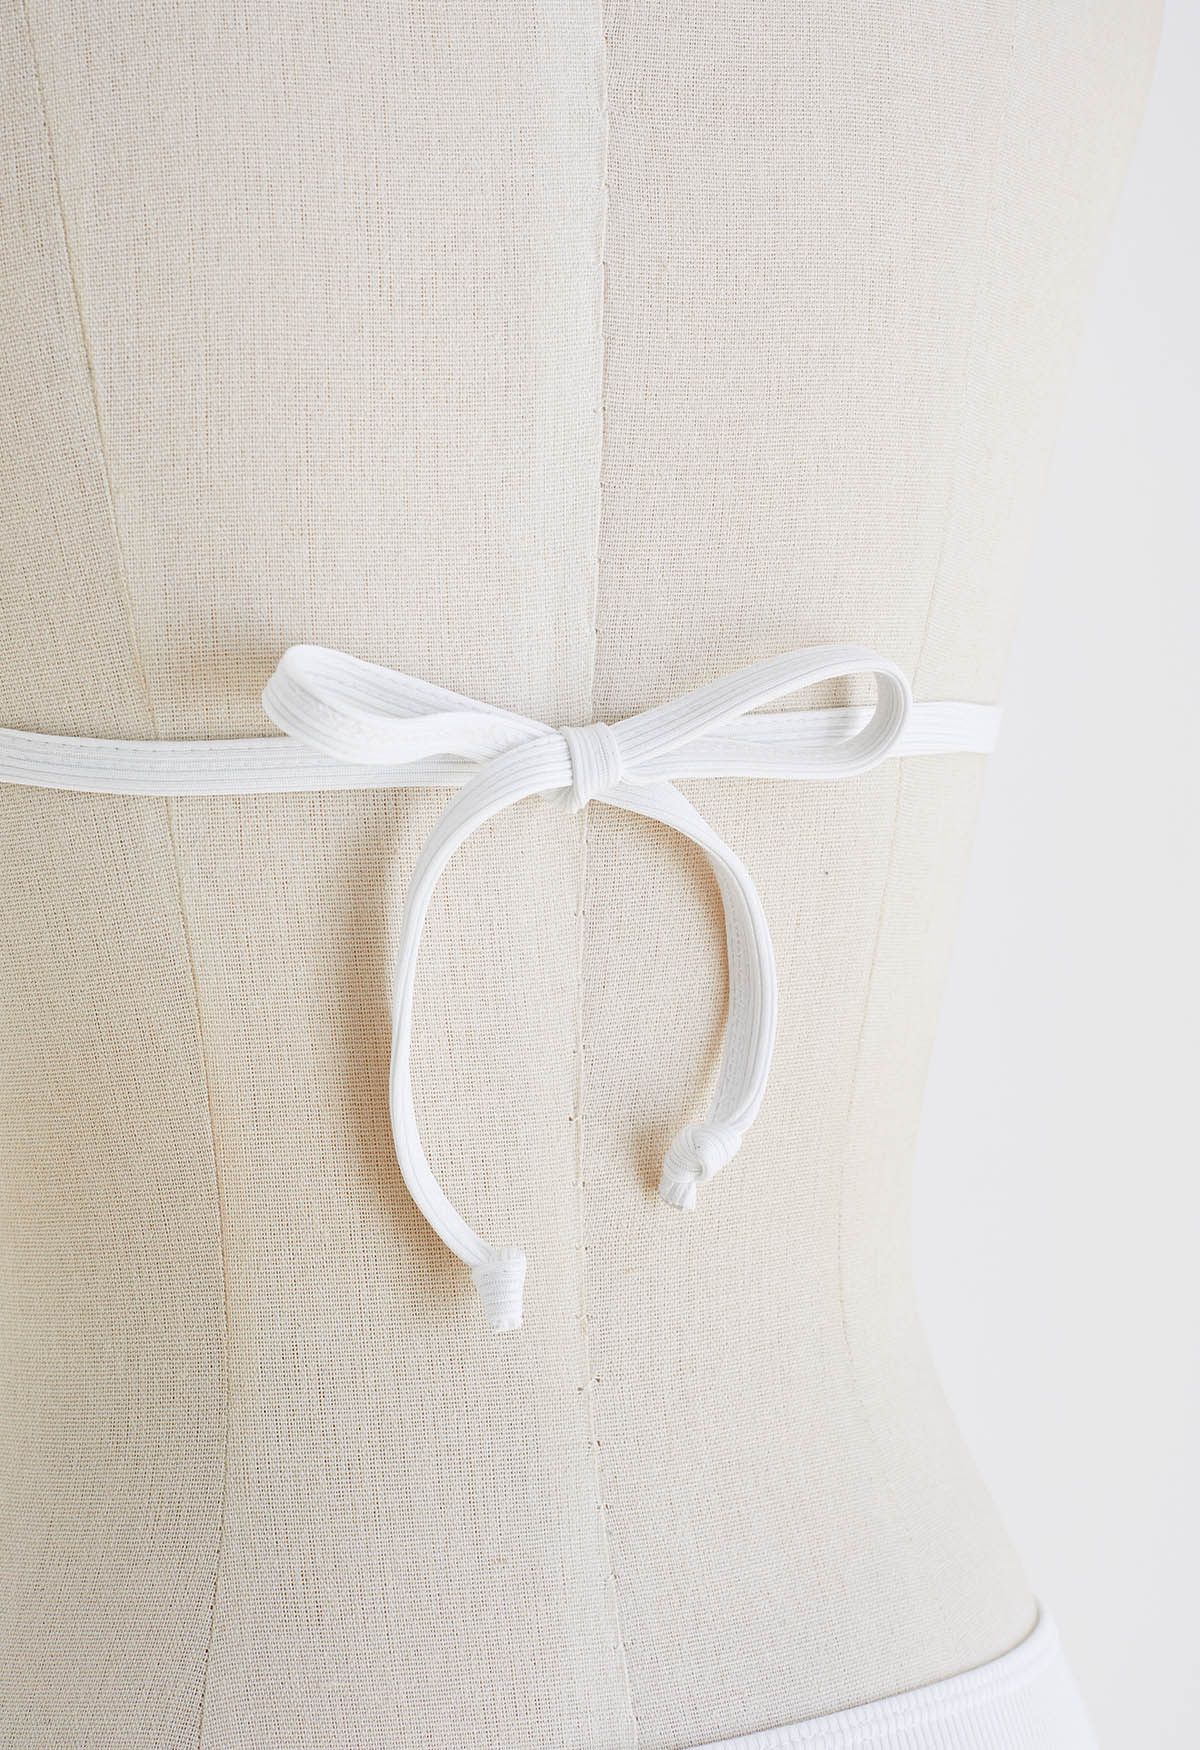 Plain White Tie-String Bikini Set